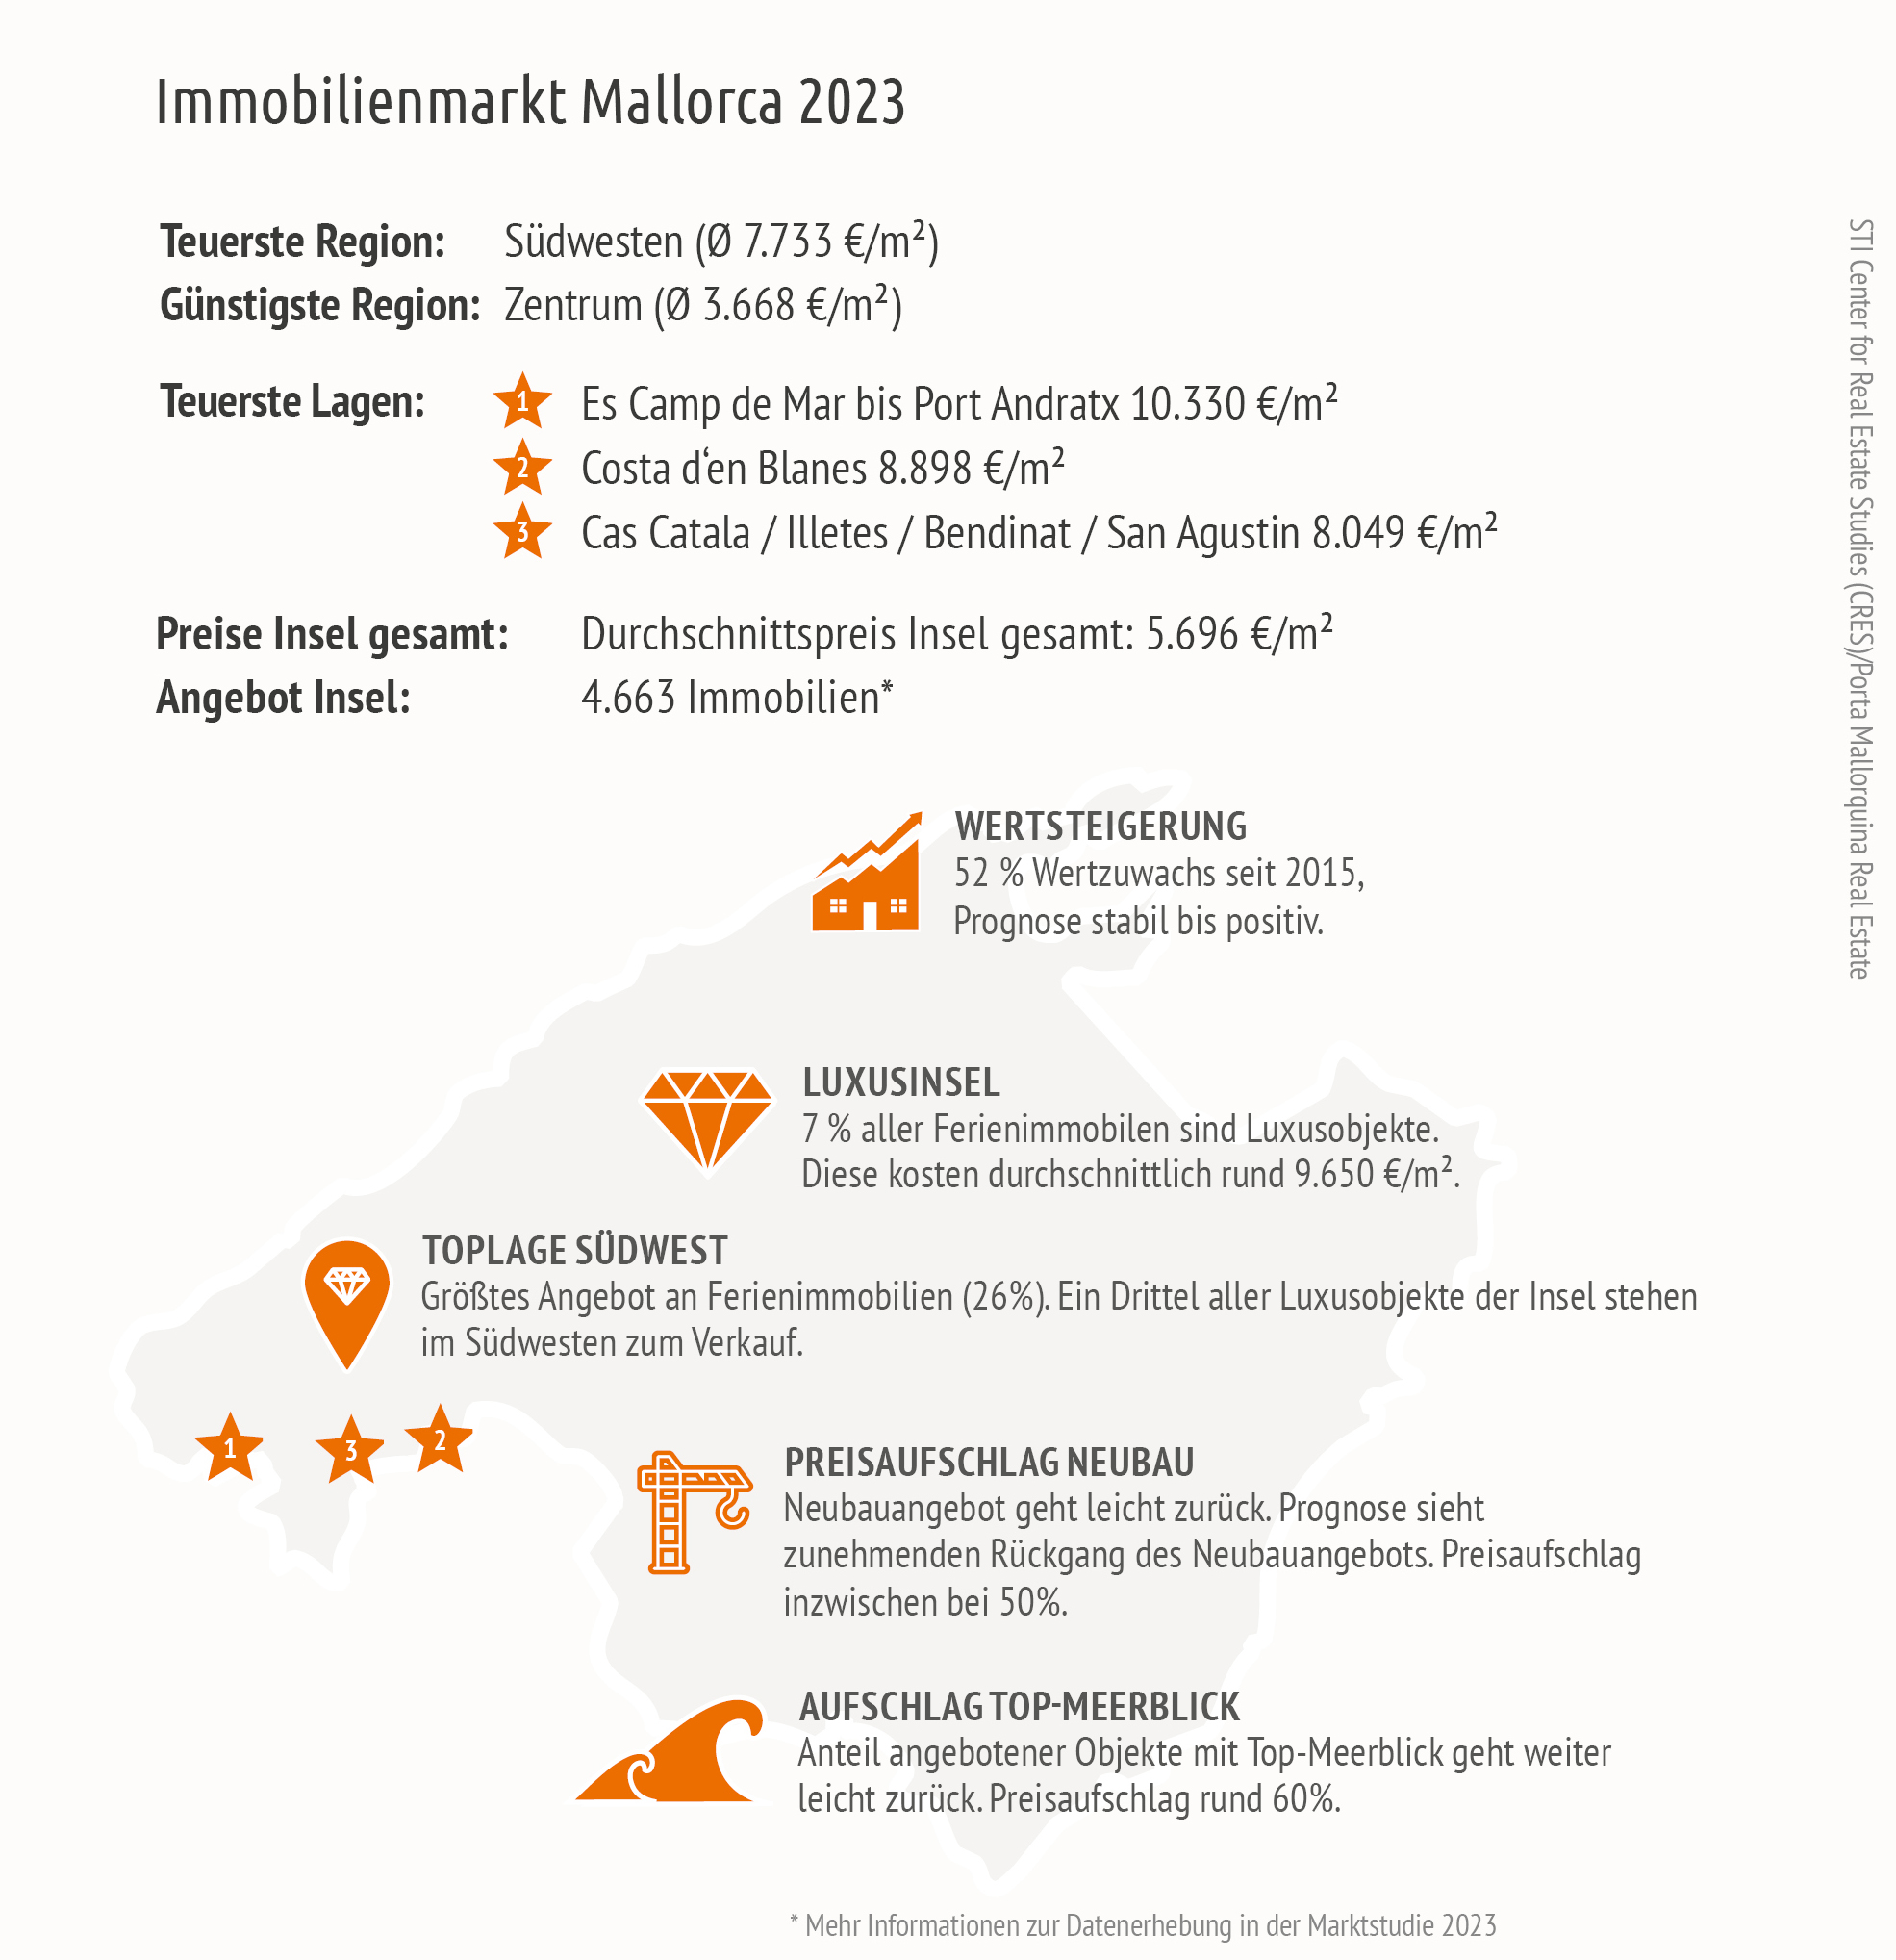 Immobilienmarkt Mallorca 2023